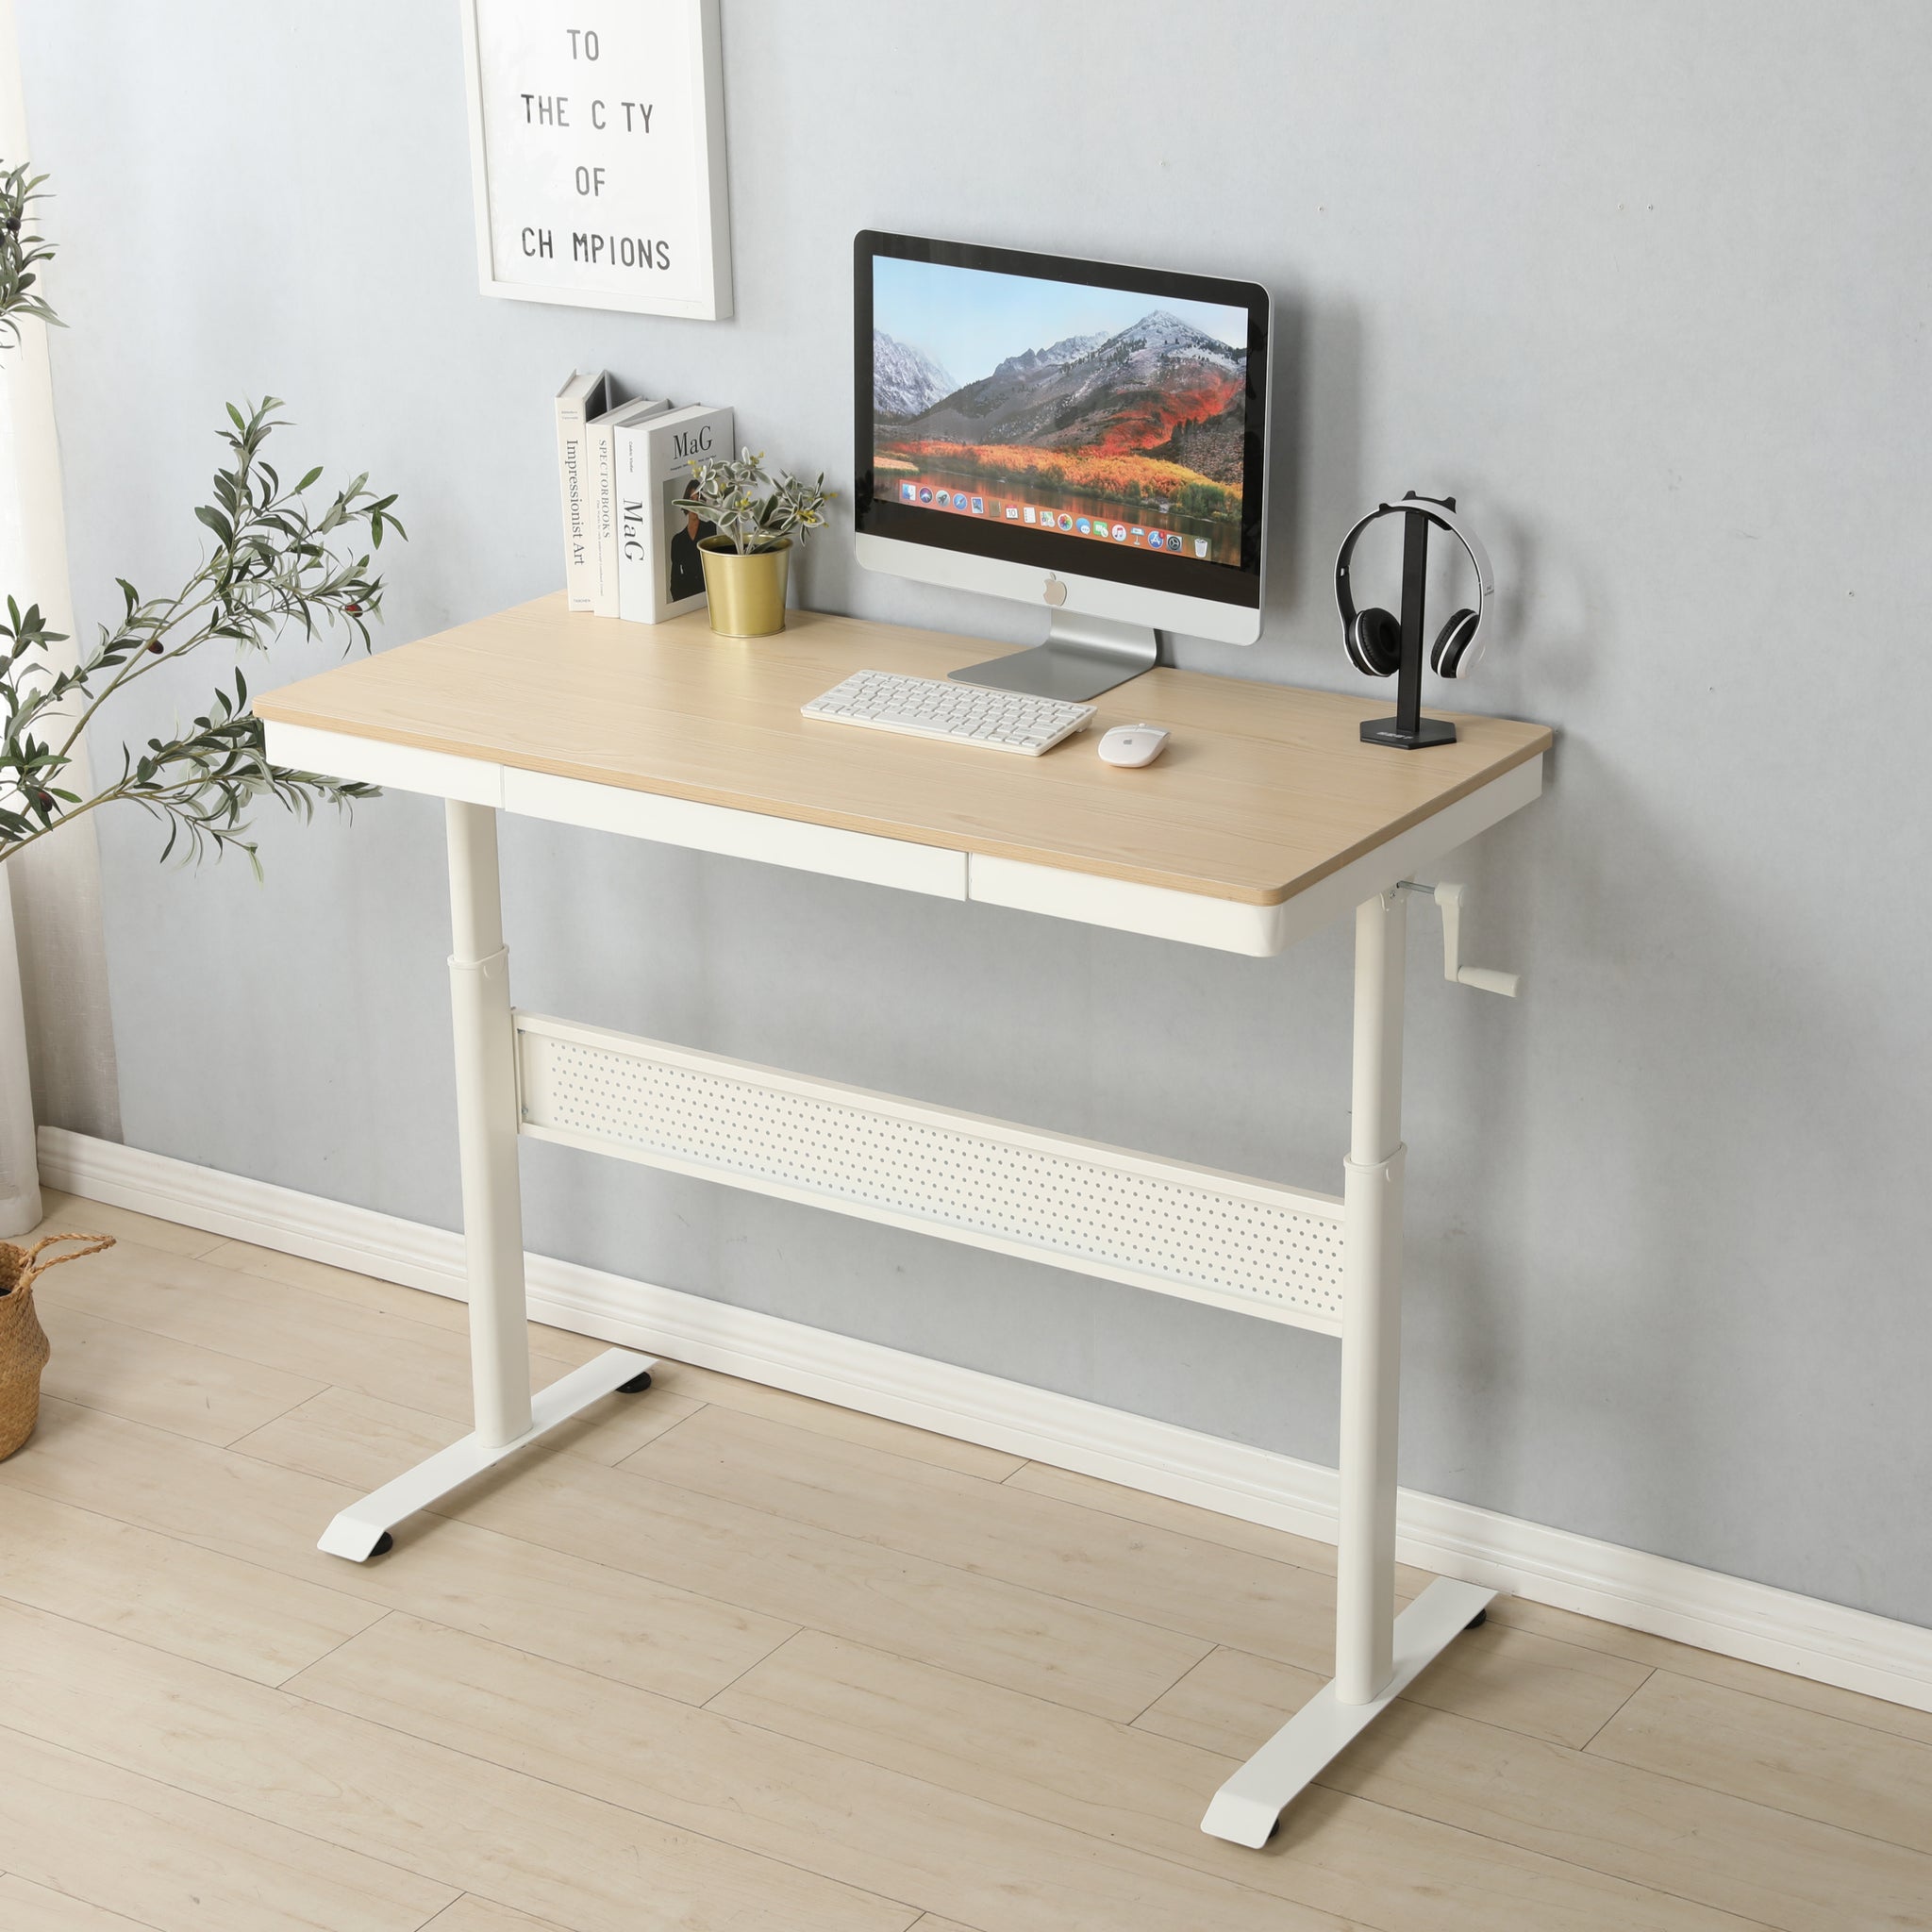 Maple Tabletop 48 x 24 InchesStanding Desk with Metal maple-mdf-steel